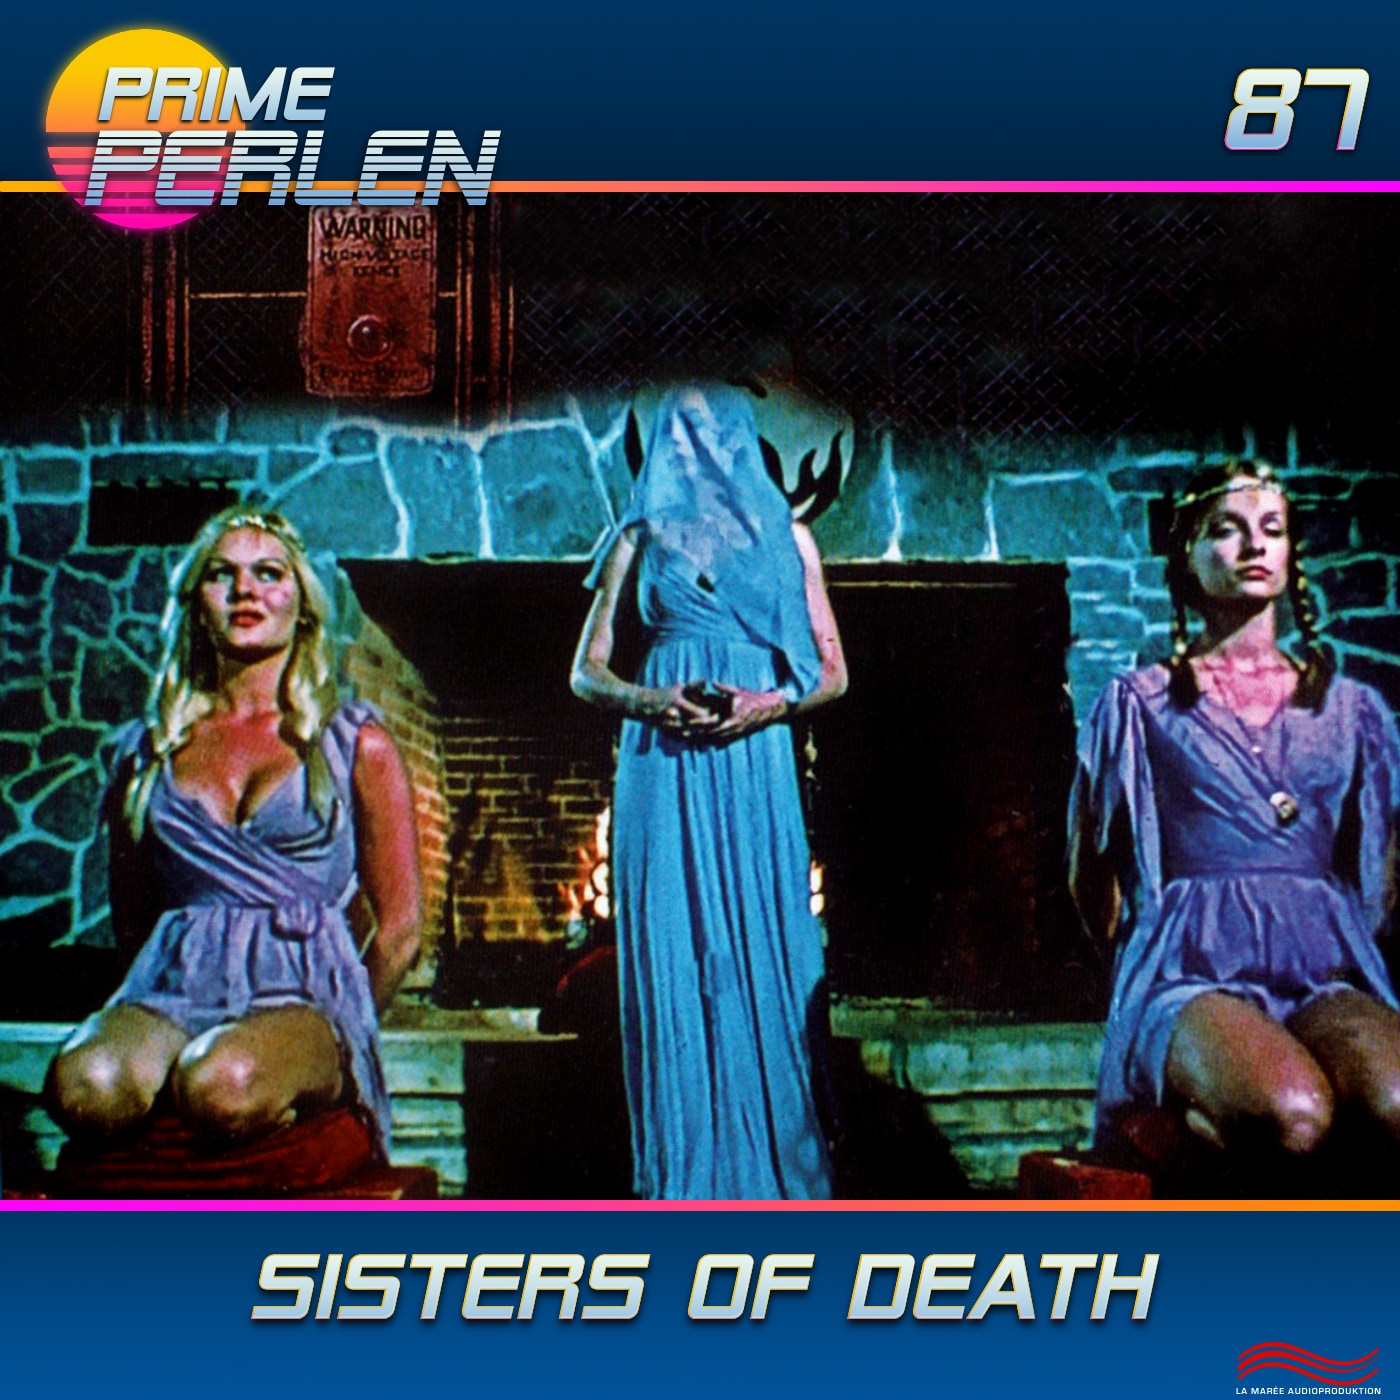 Prime Perlen #87 – Tödliche Spiele - Sisters of Death